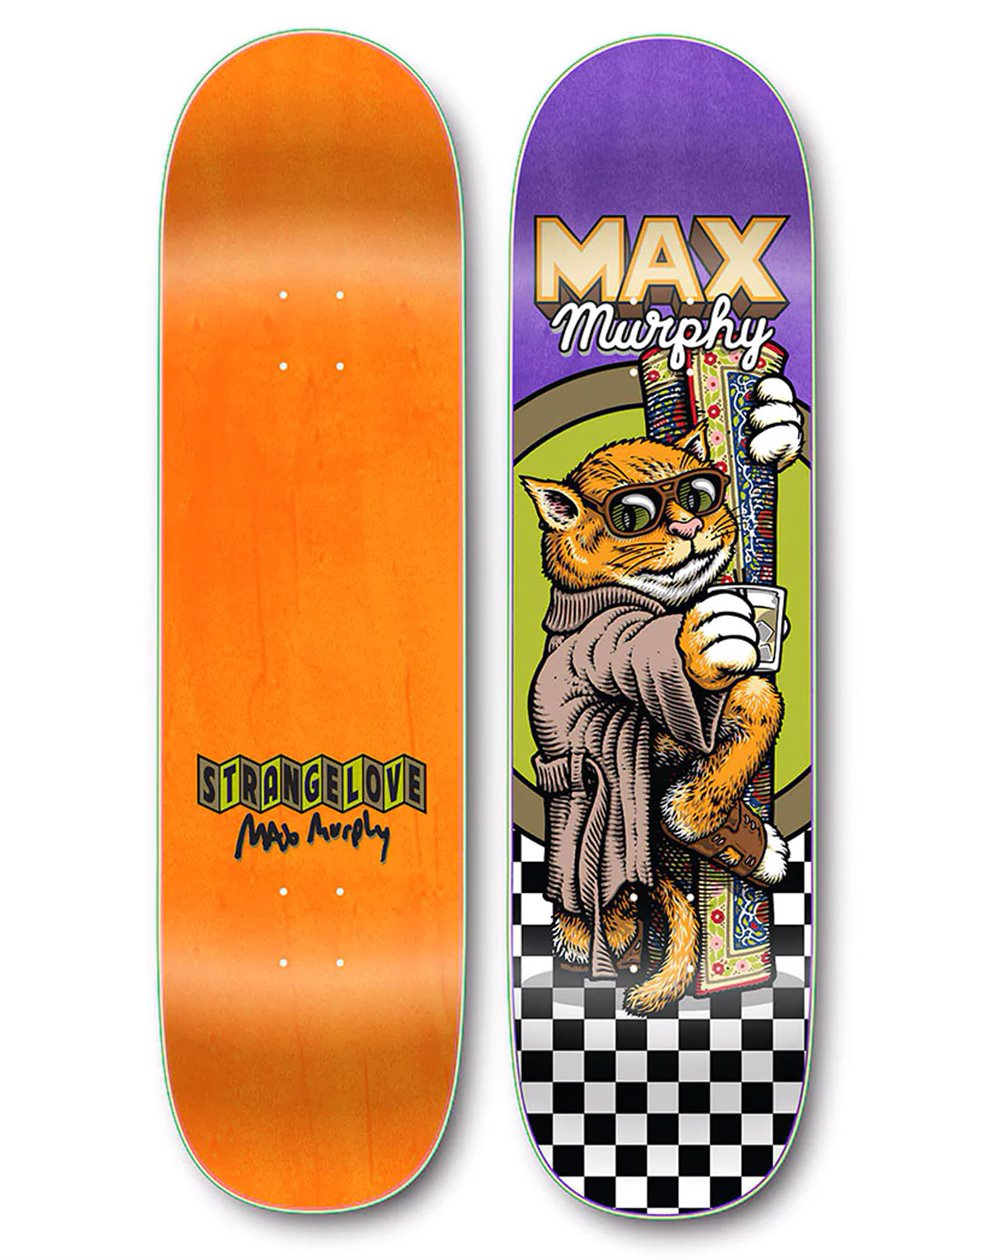 StrangeLove Shape Skate Louis the Cat (Max Murphy) 8.5"